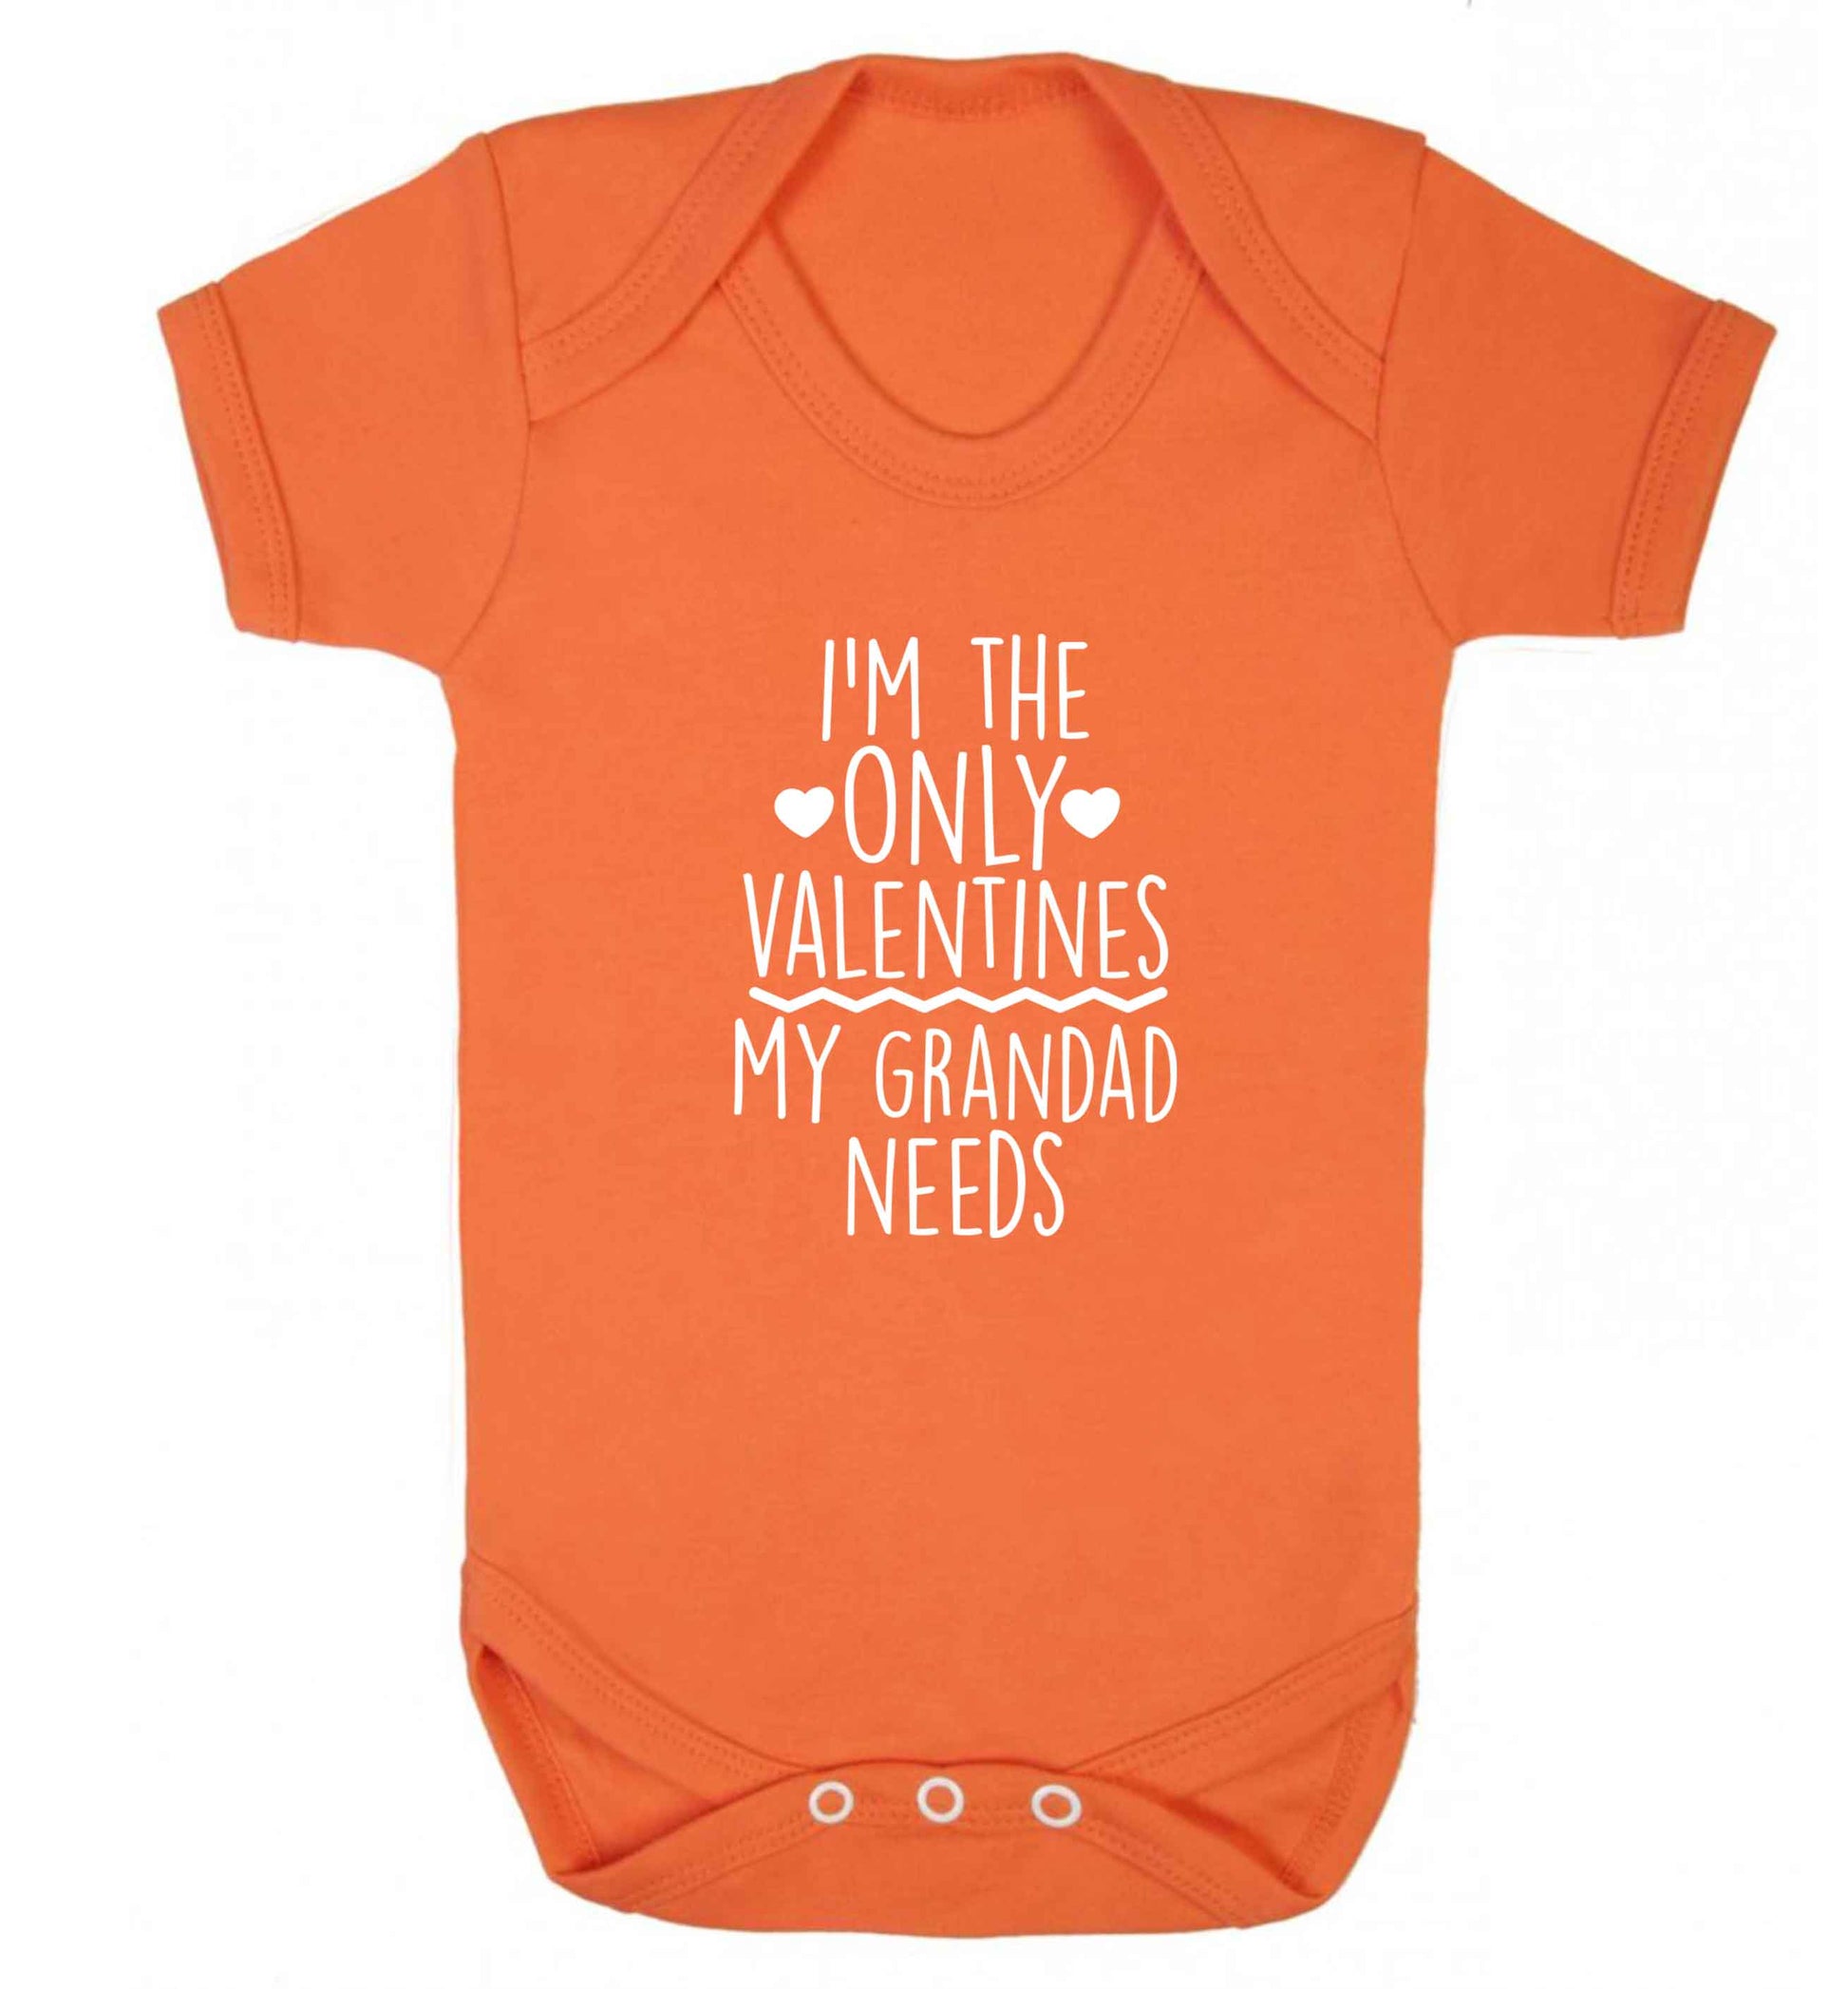 I'm the only valentines my grandad needs baby vest orange 18-24 months